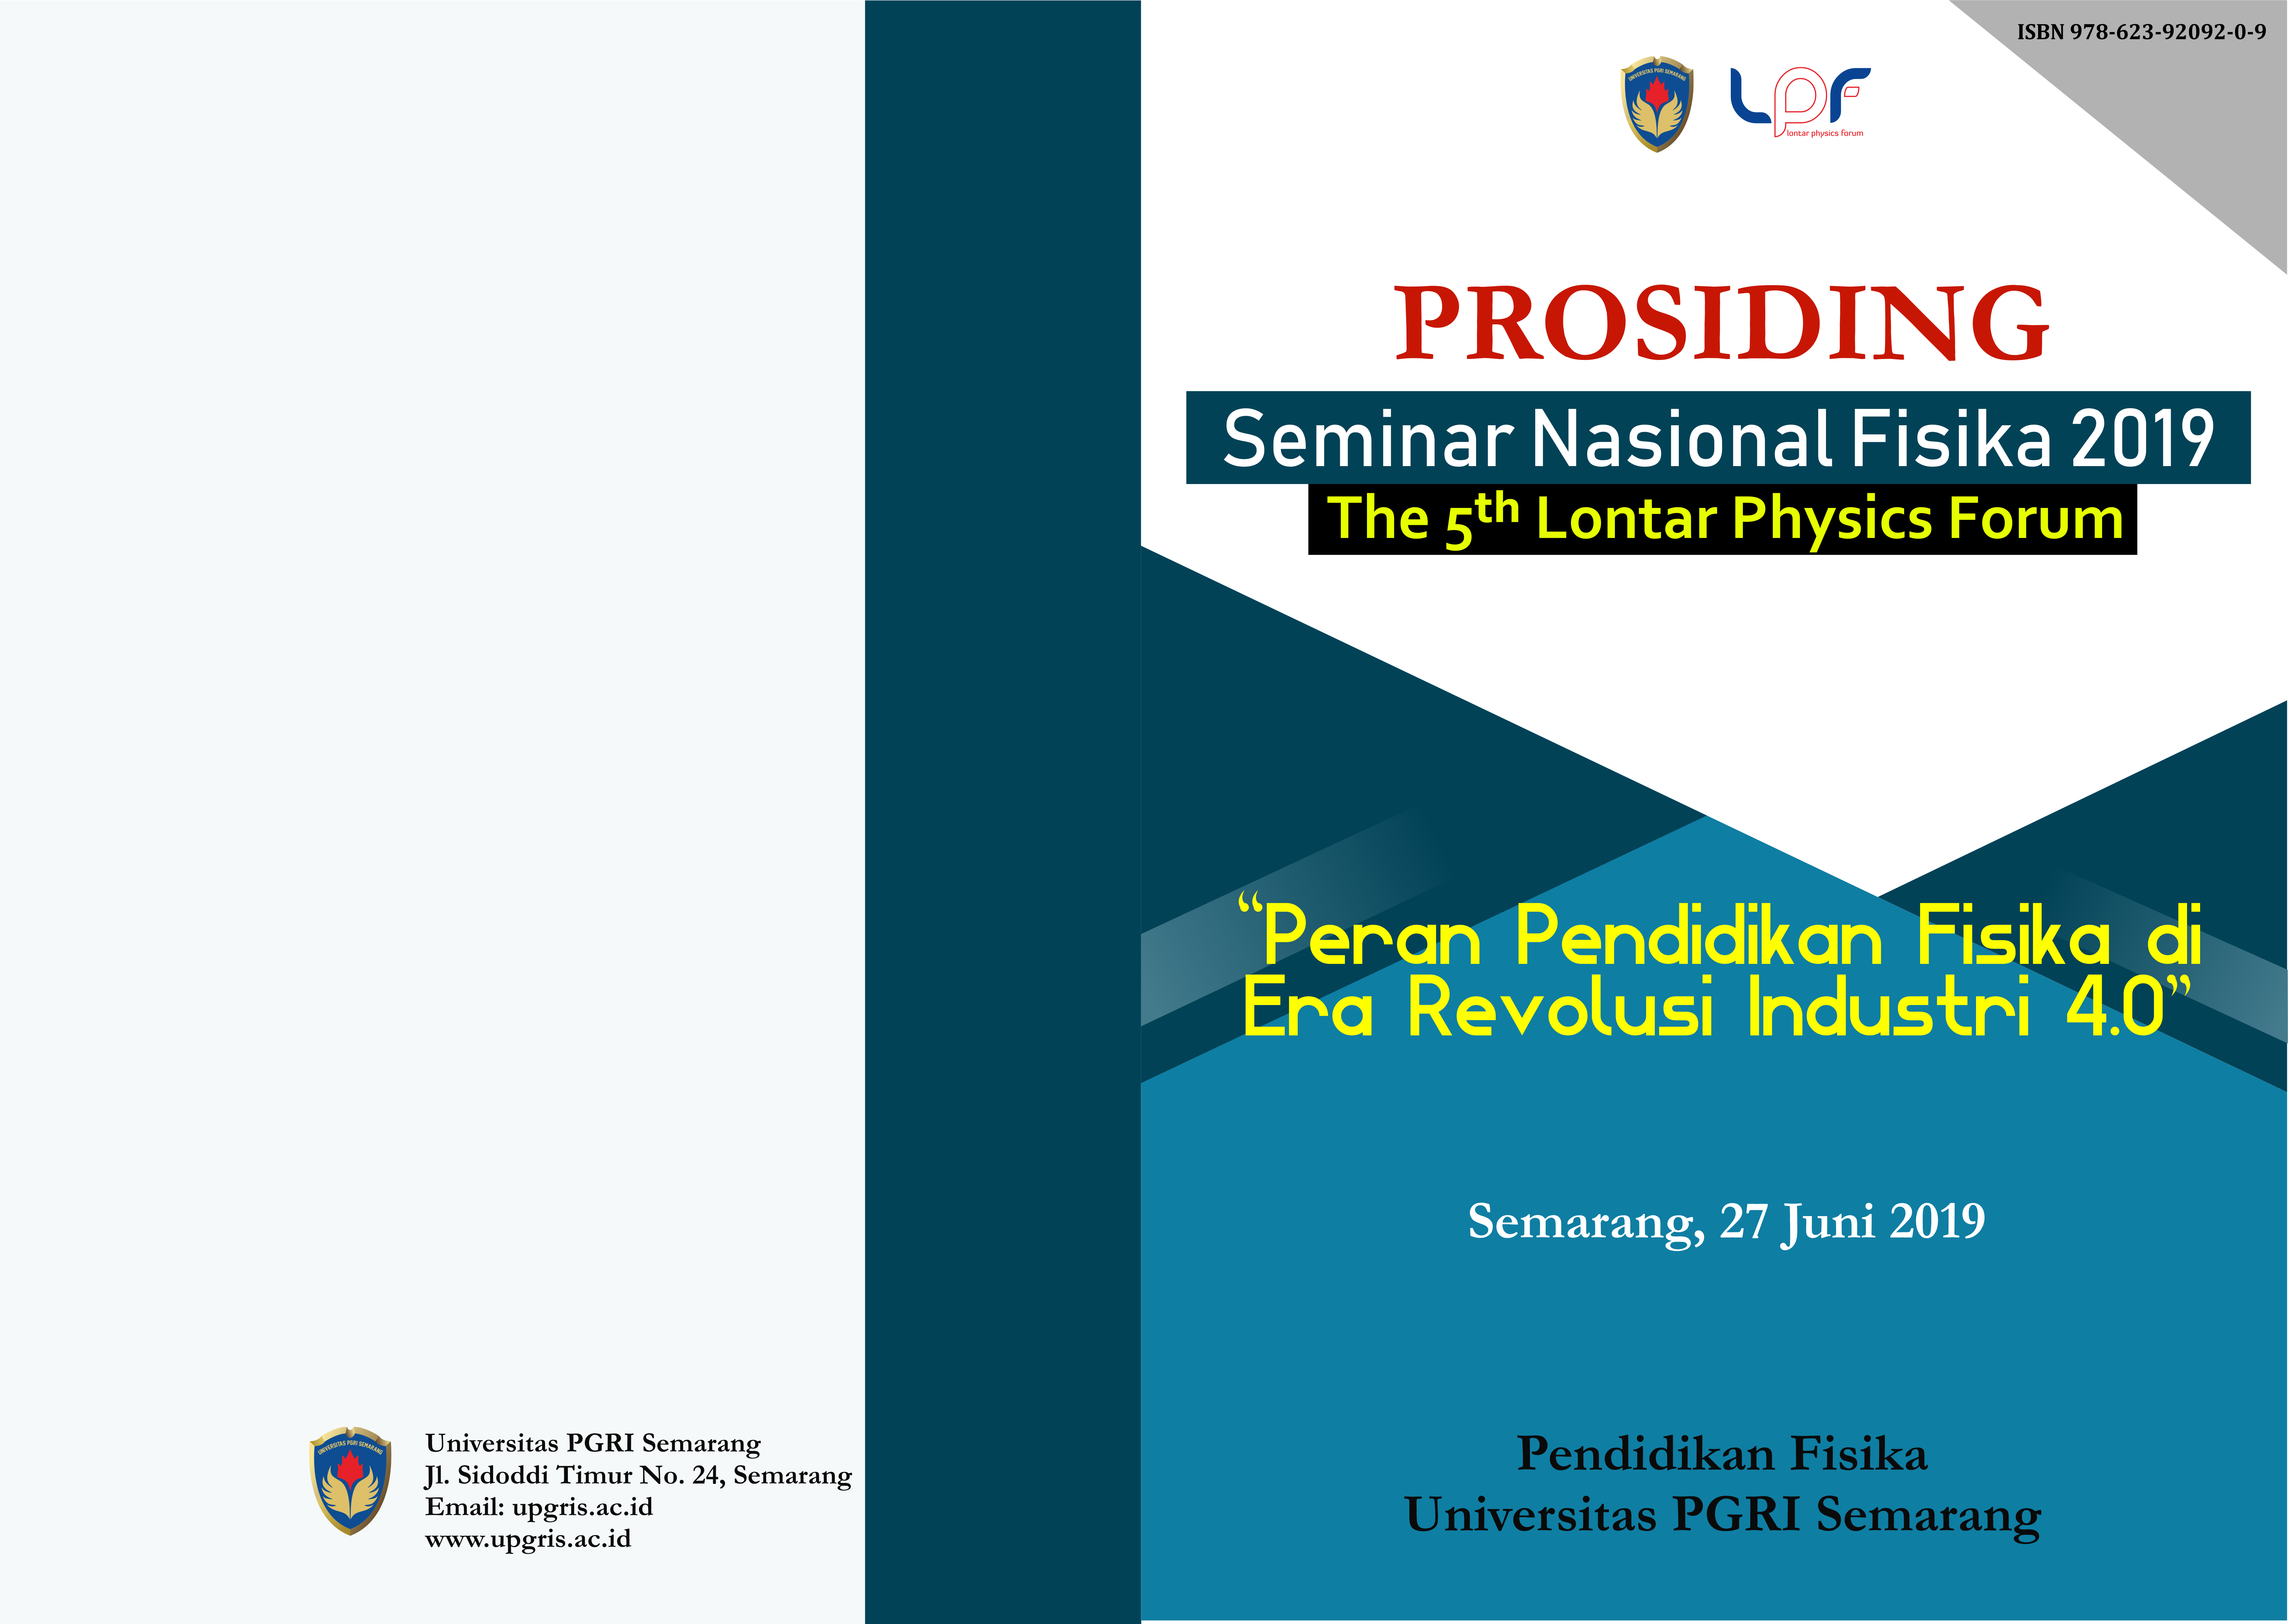 Lontar Physics Forum